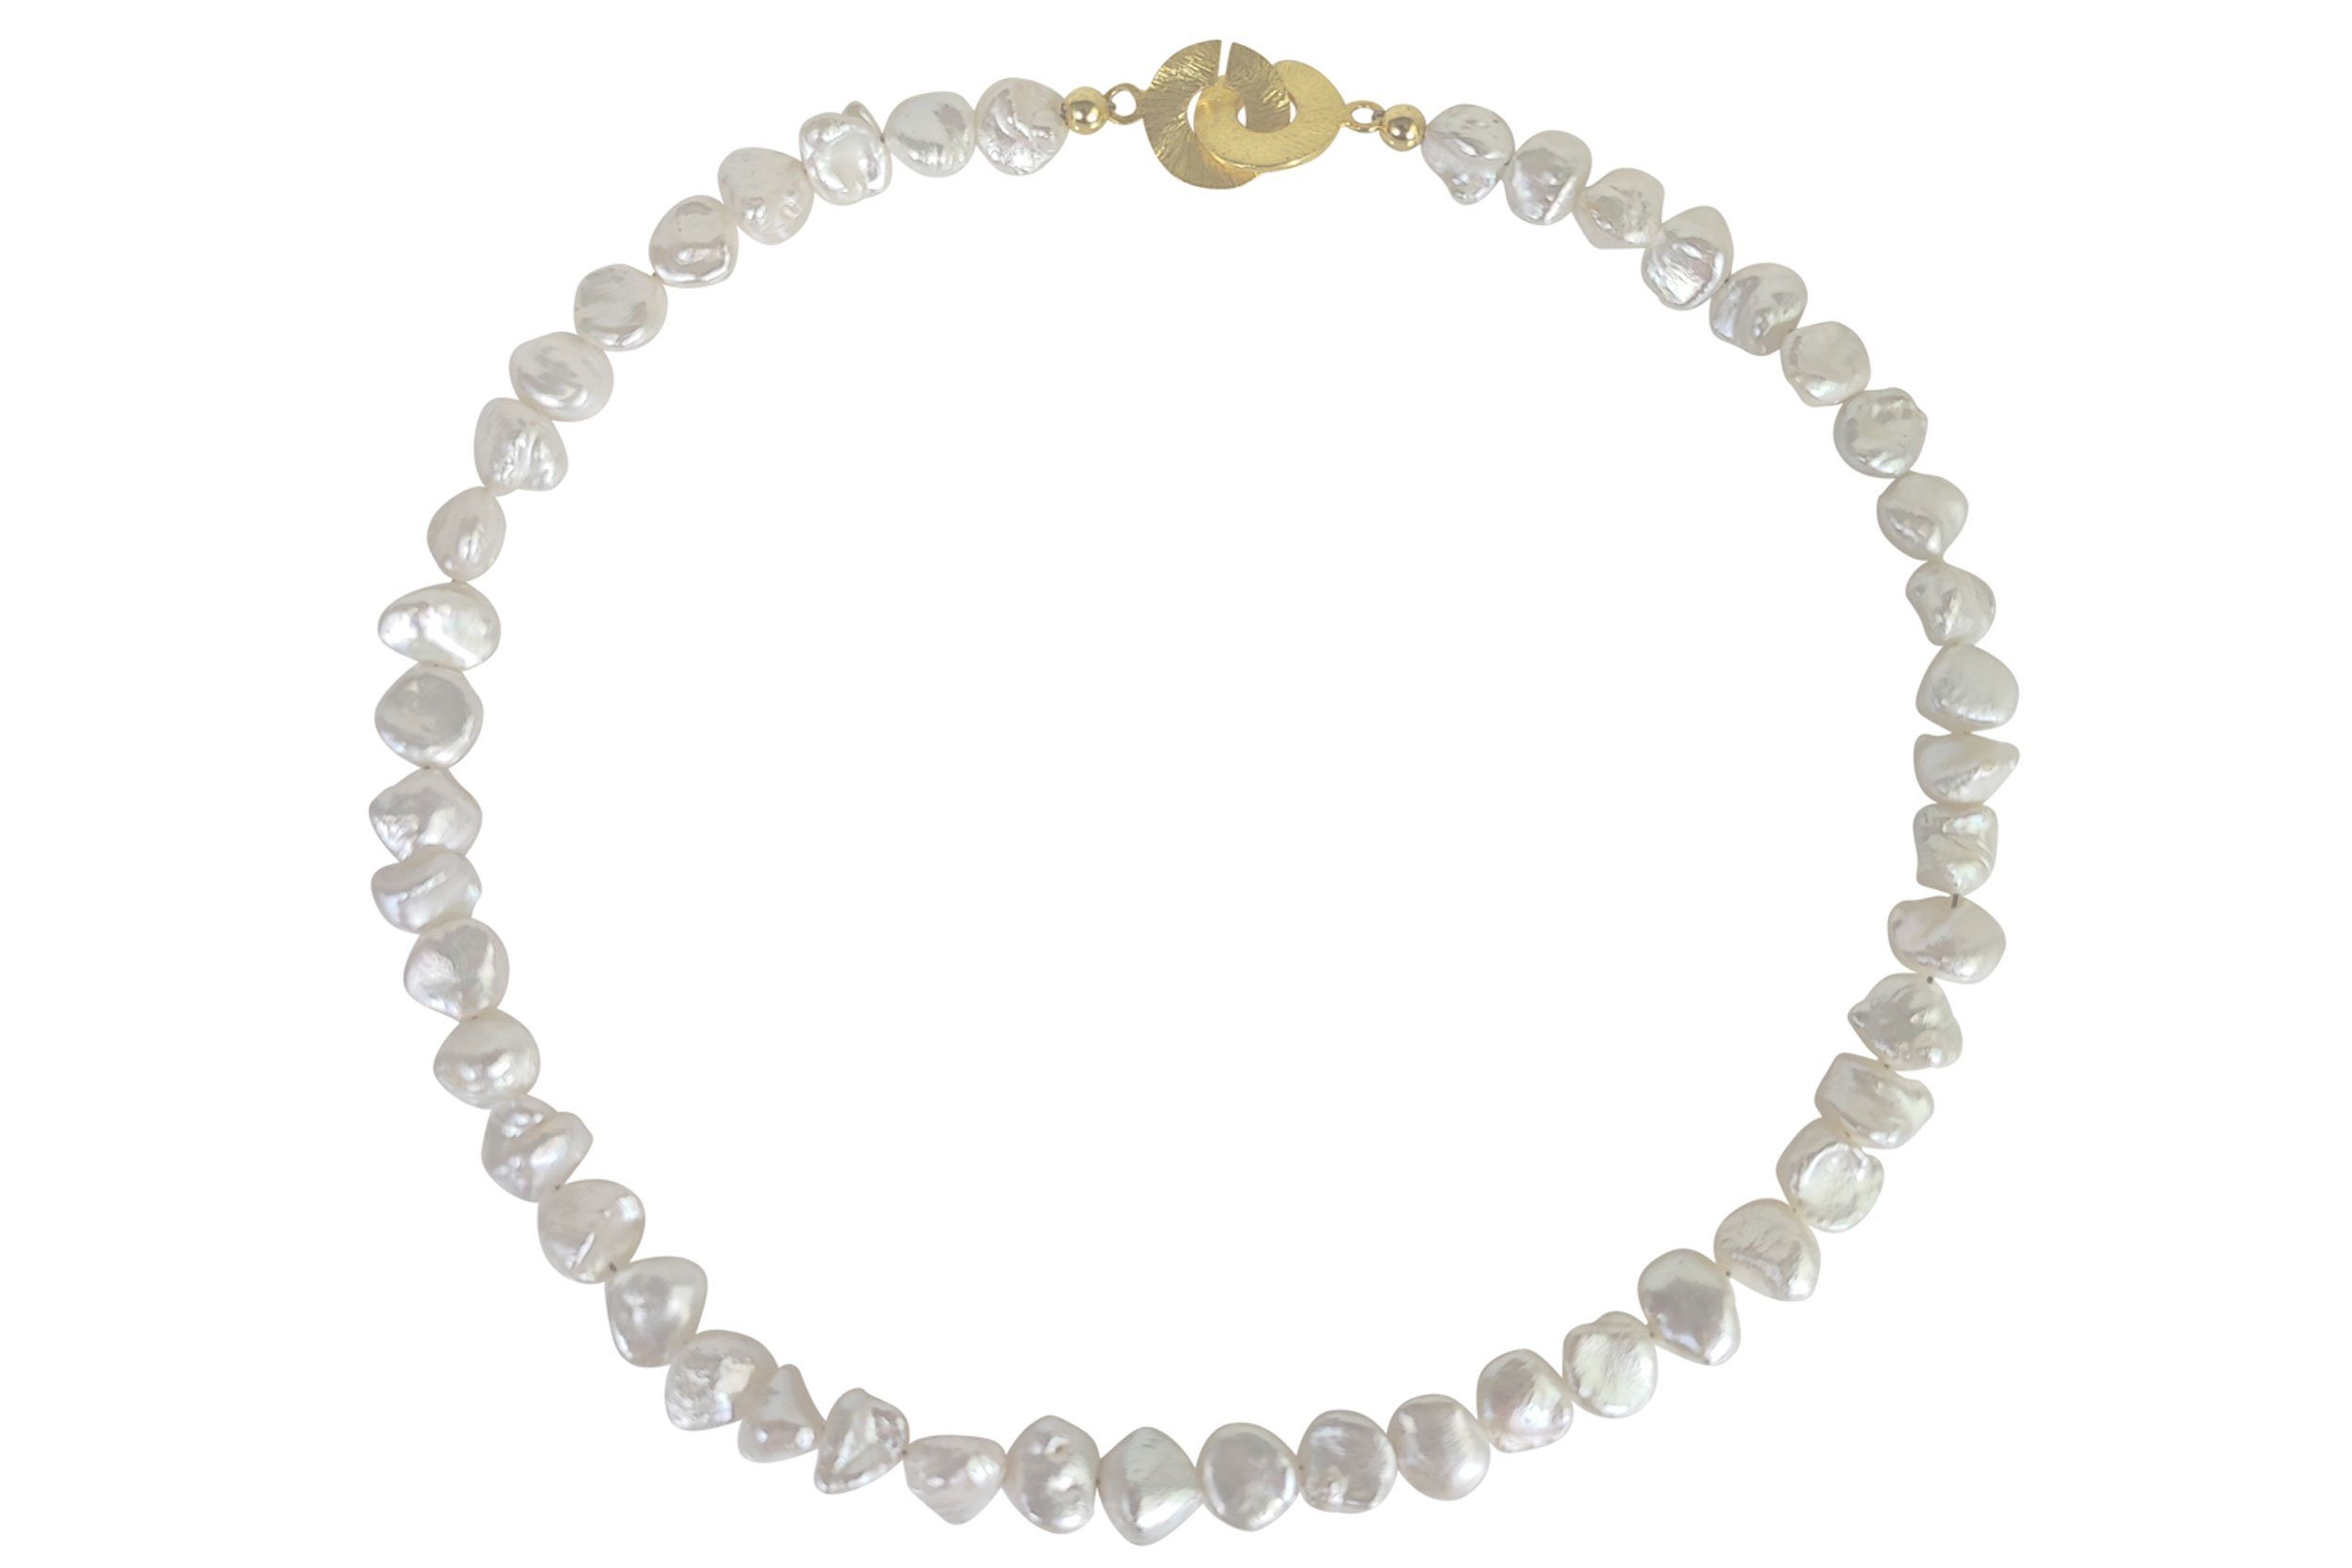 ALUNA Perlenkette mit Keshi-Perlen Ring-Ringschließe, Silber 925 vergoldet  - Made in Germany - ke0696x20